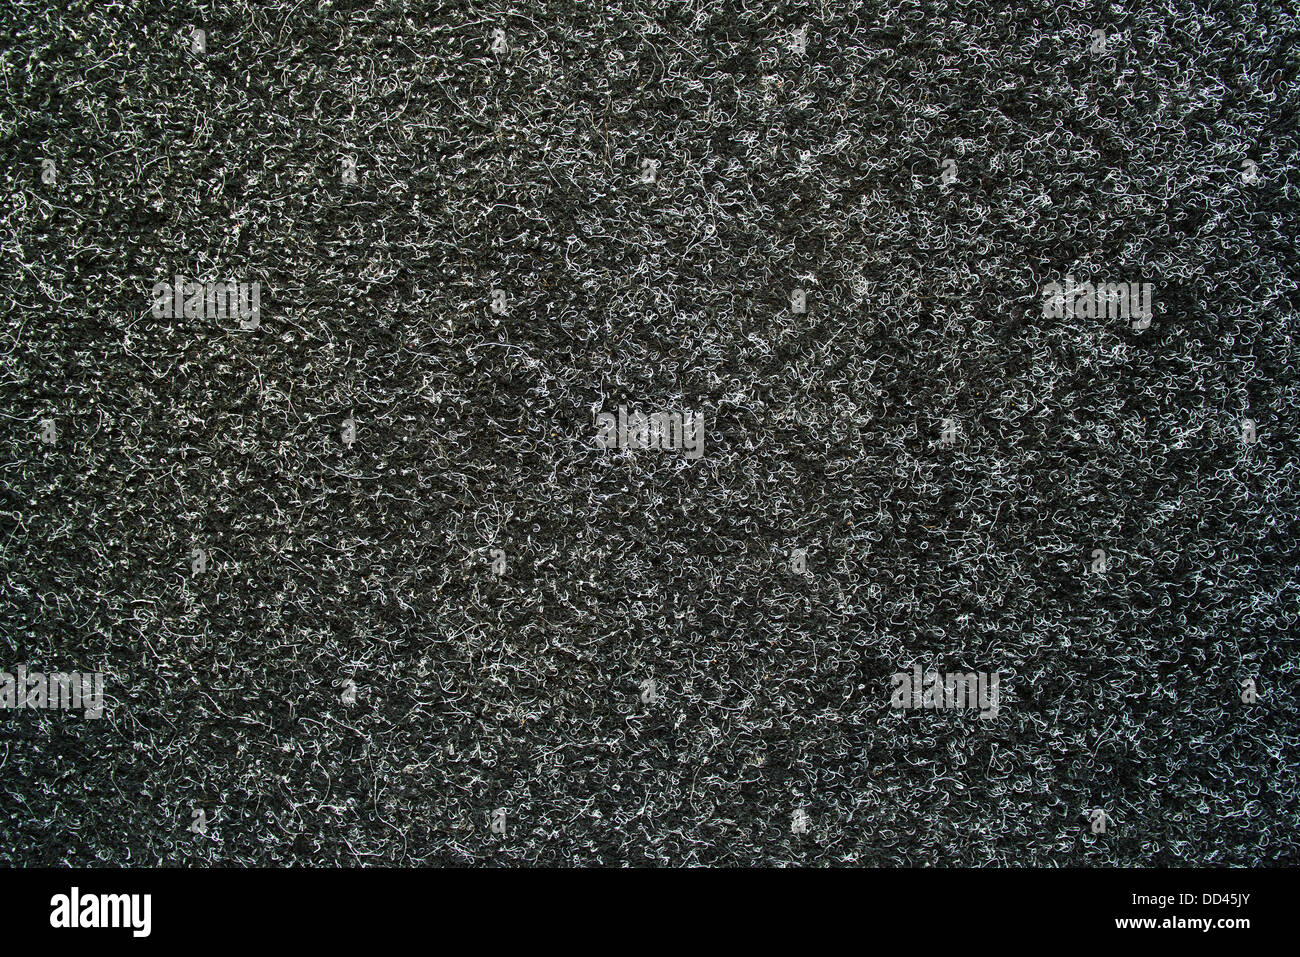 Black carpet texture as background. Home interior. Stock Photo